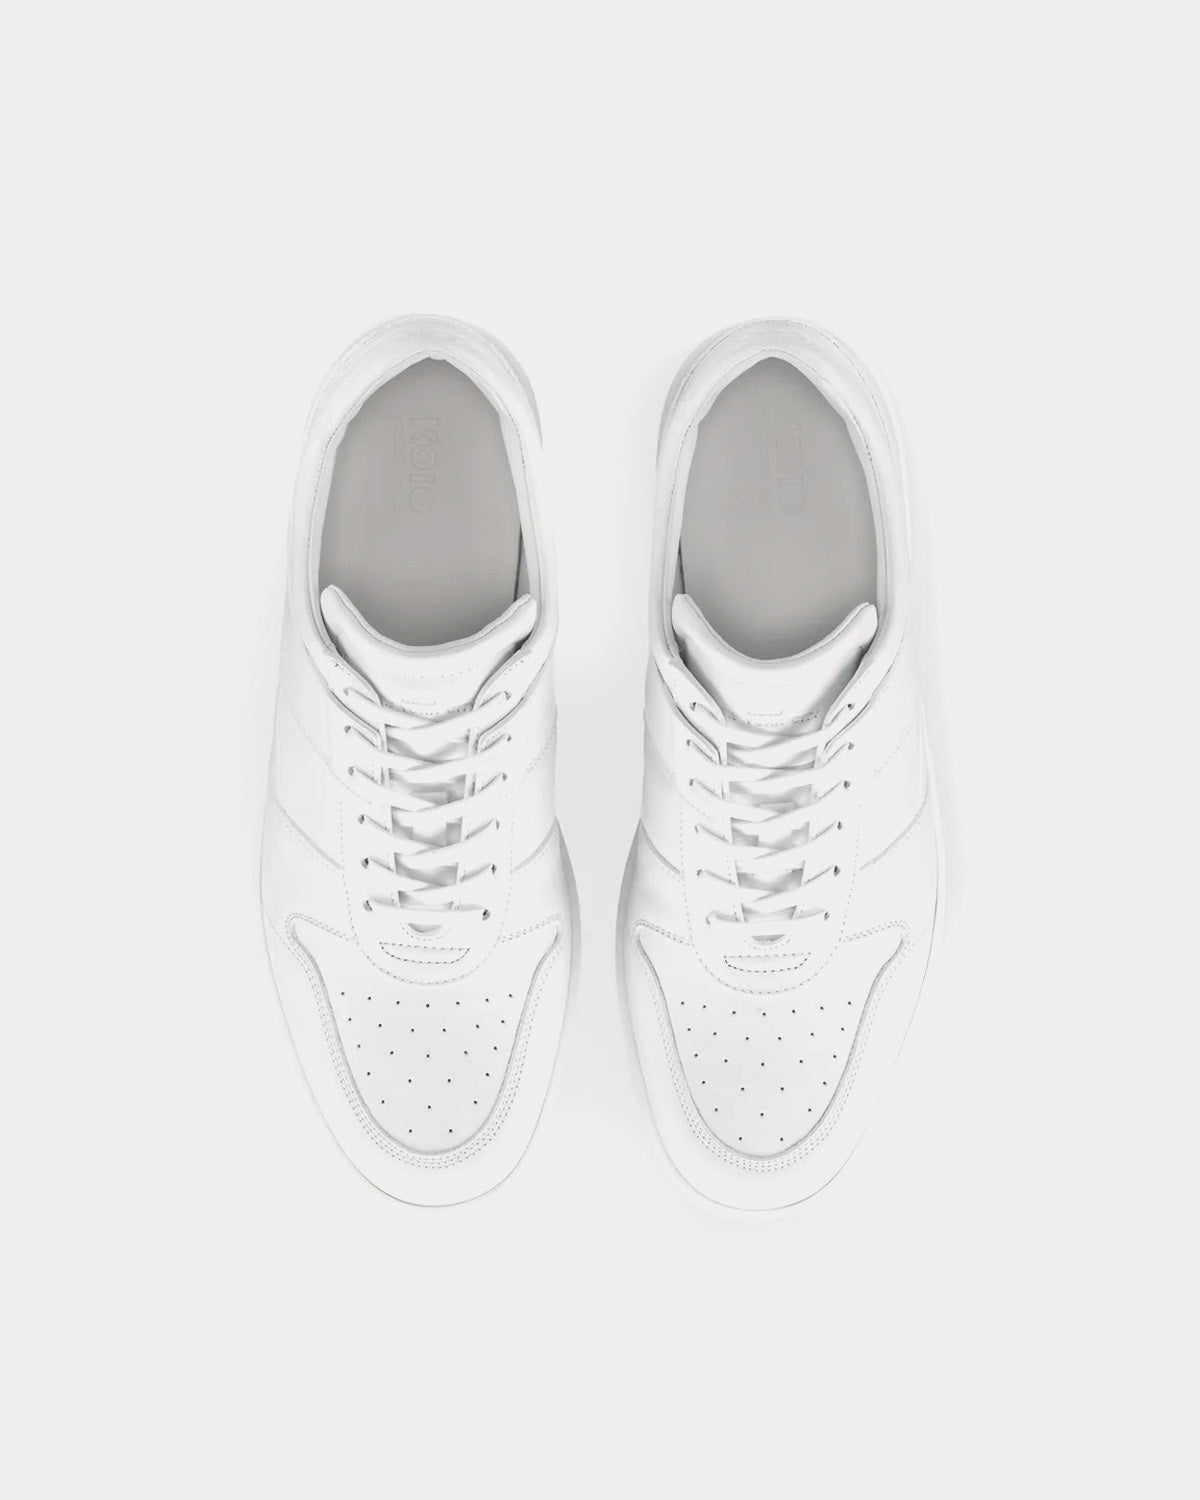 Koio - Aventino Triple White Low Top Sneakers